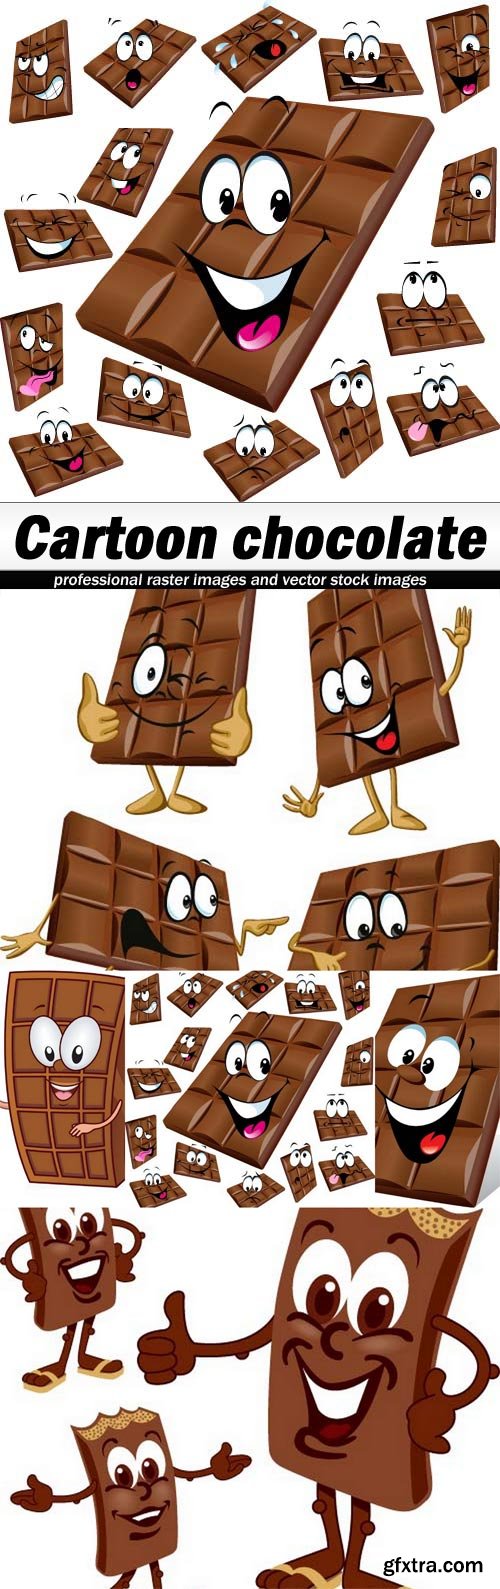 Cartoon chocolate